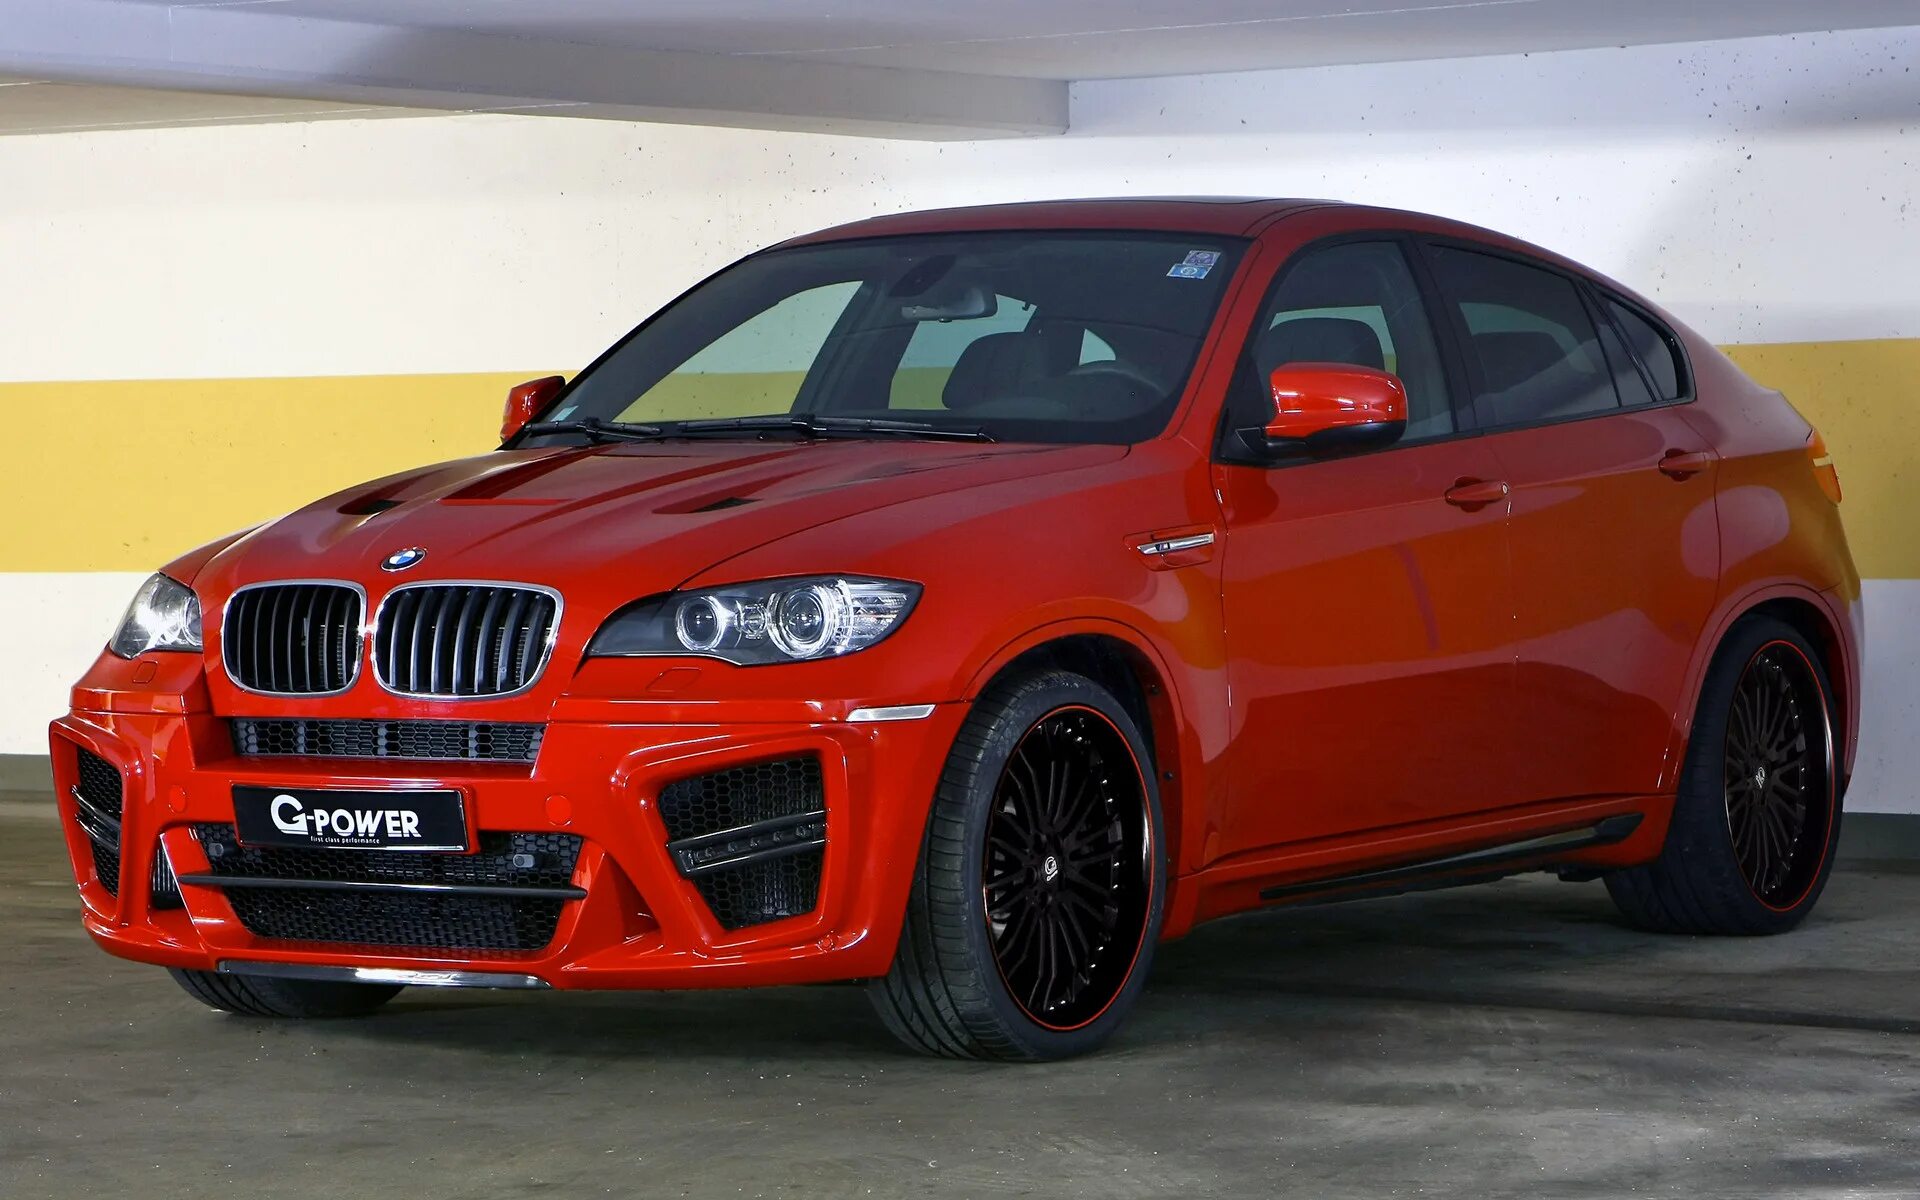 X 6 20 10. BMW x6m g Power. BMW x6m красная. BMW x6 g Power Typhoon. BMW x6m 2011.